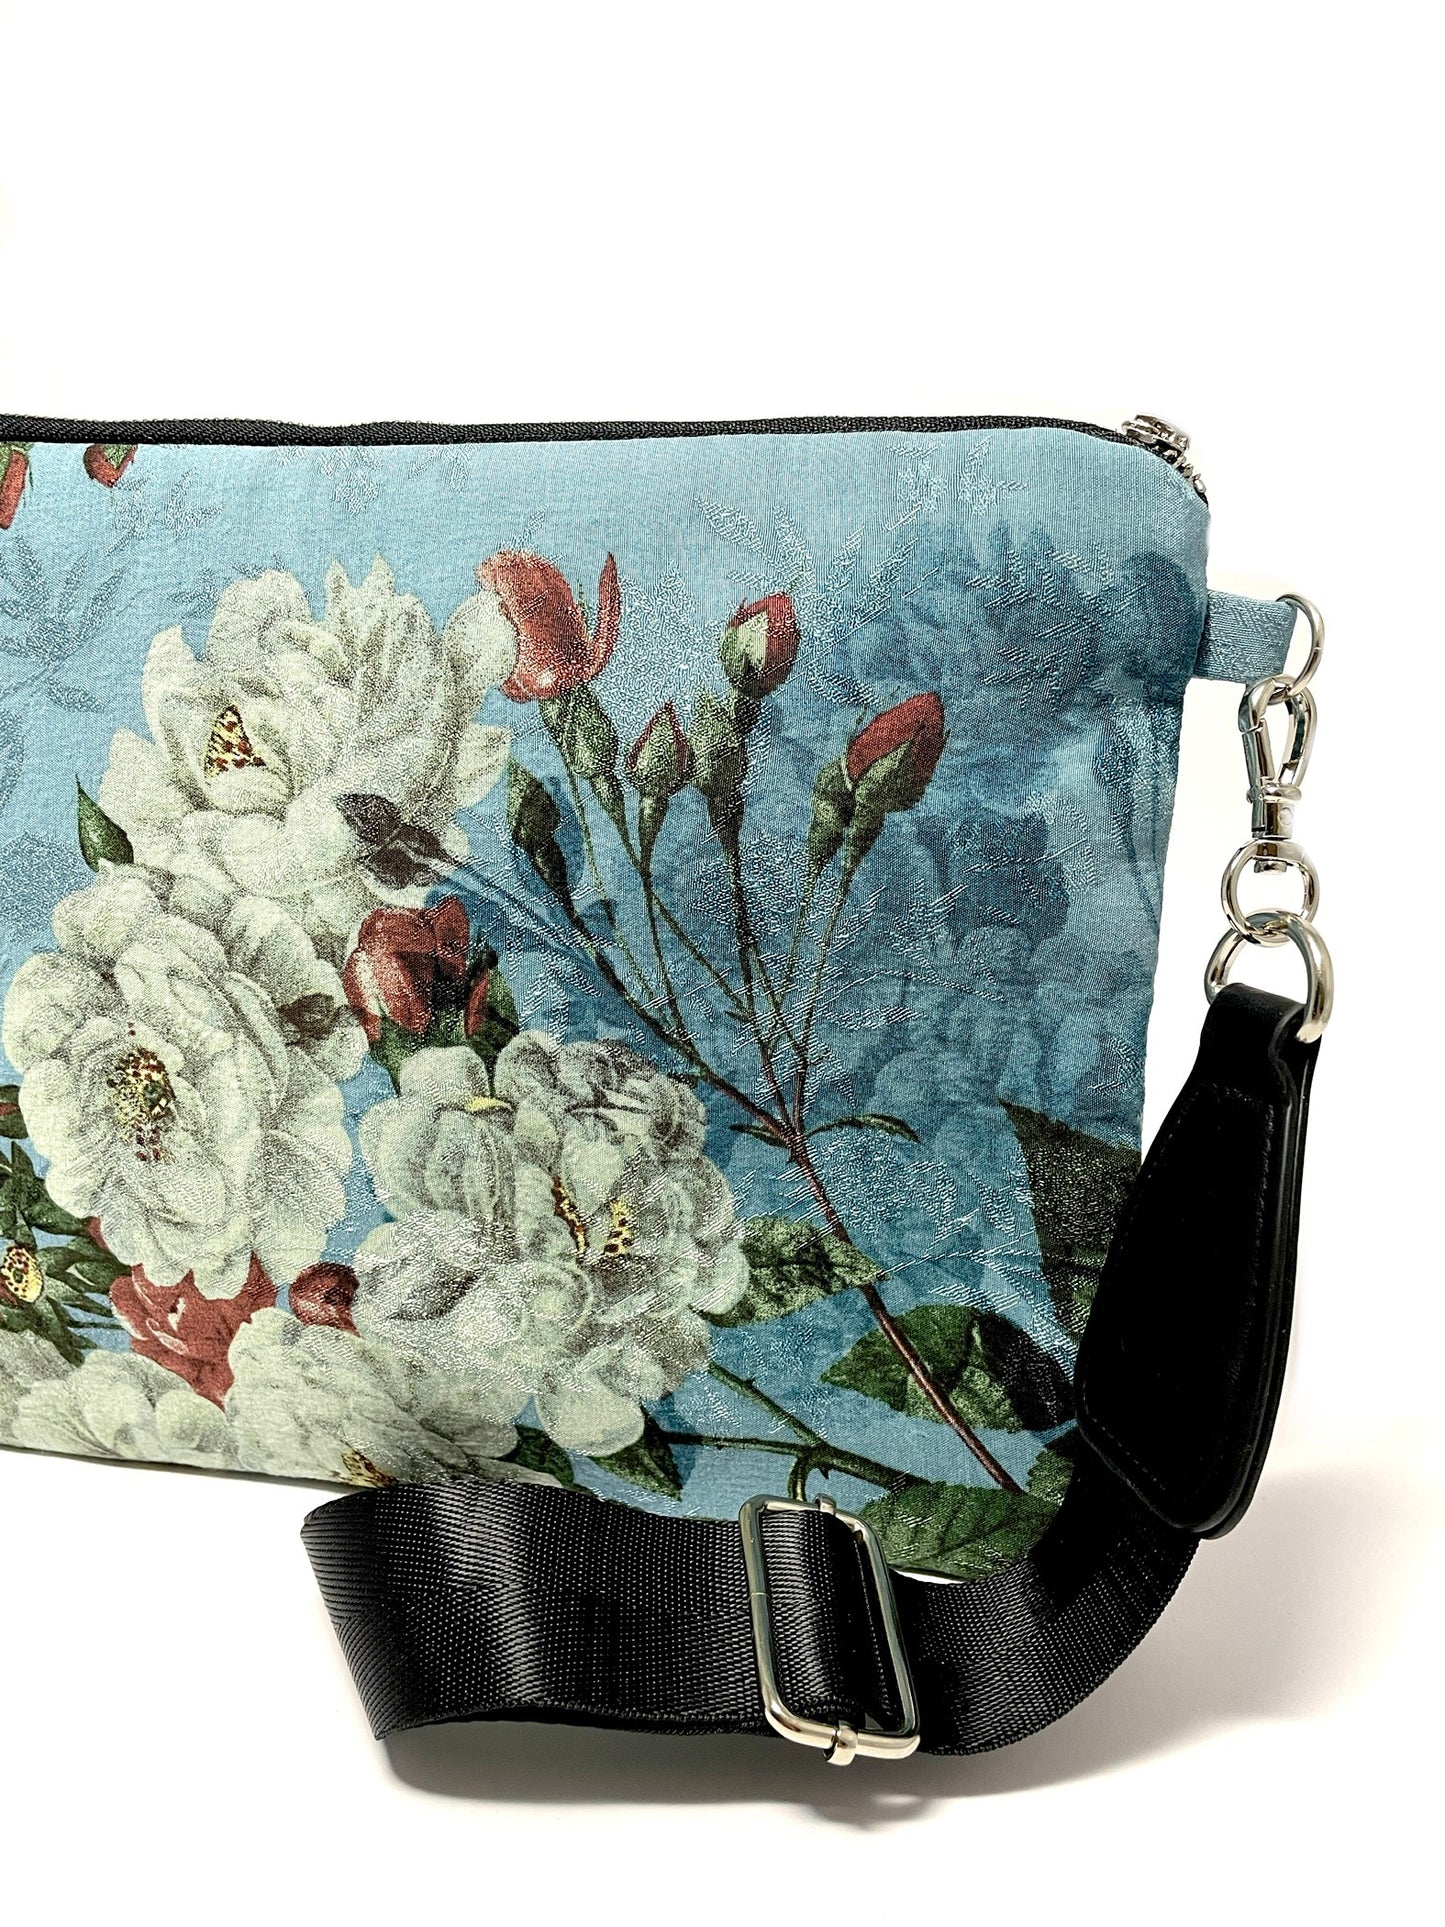 Floral crossbody bag with tassel